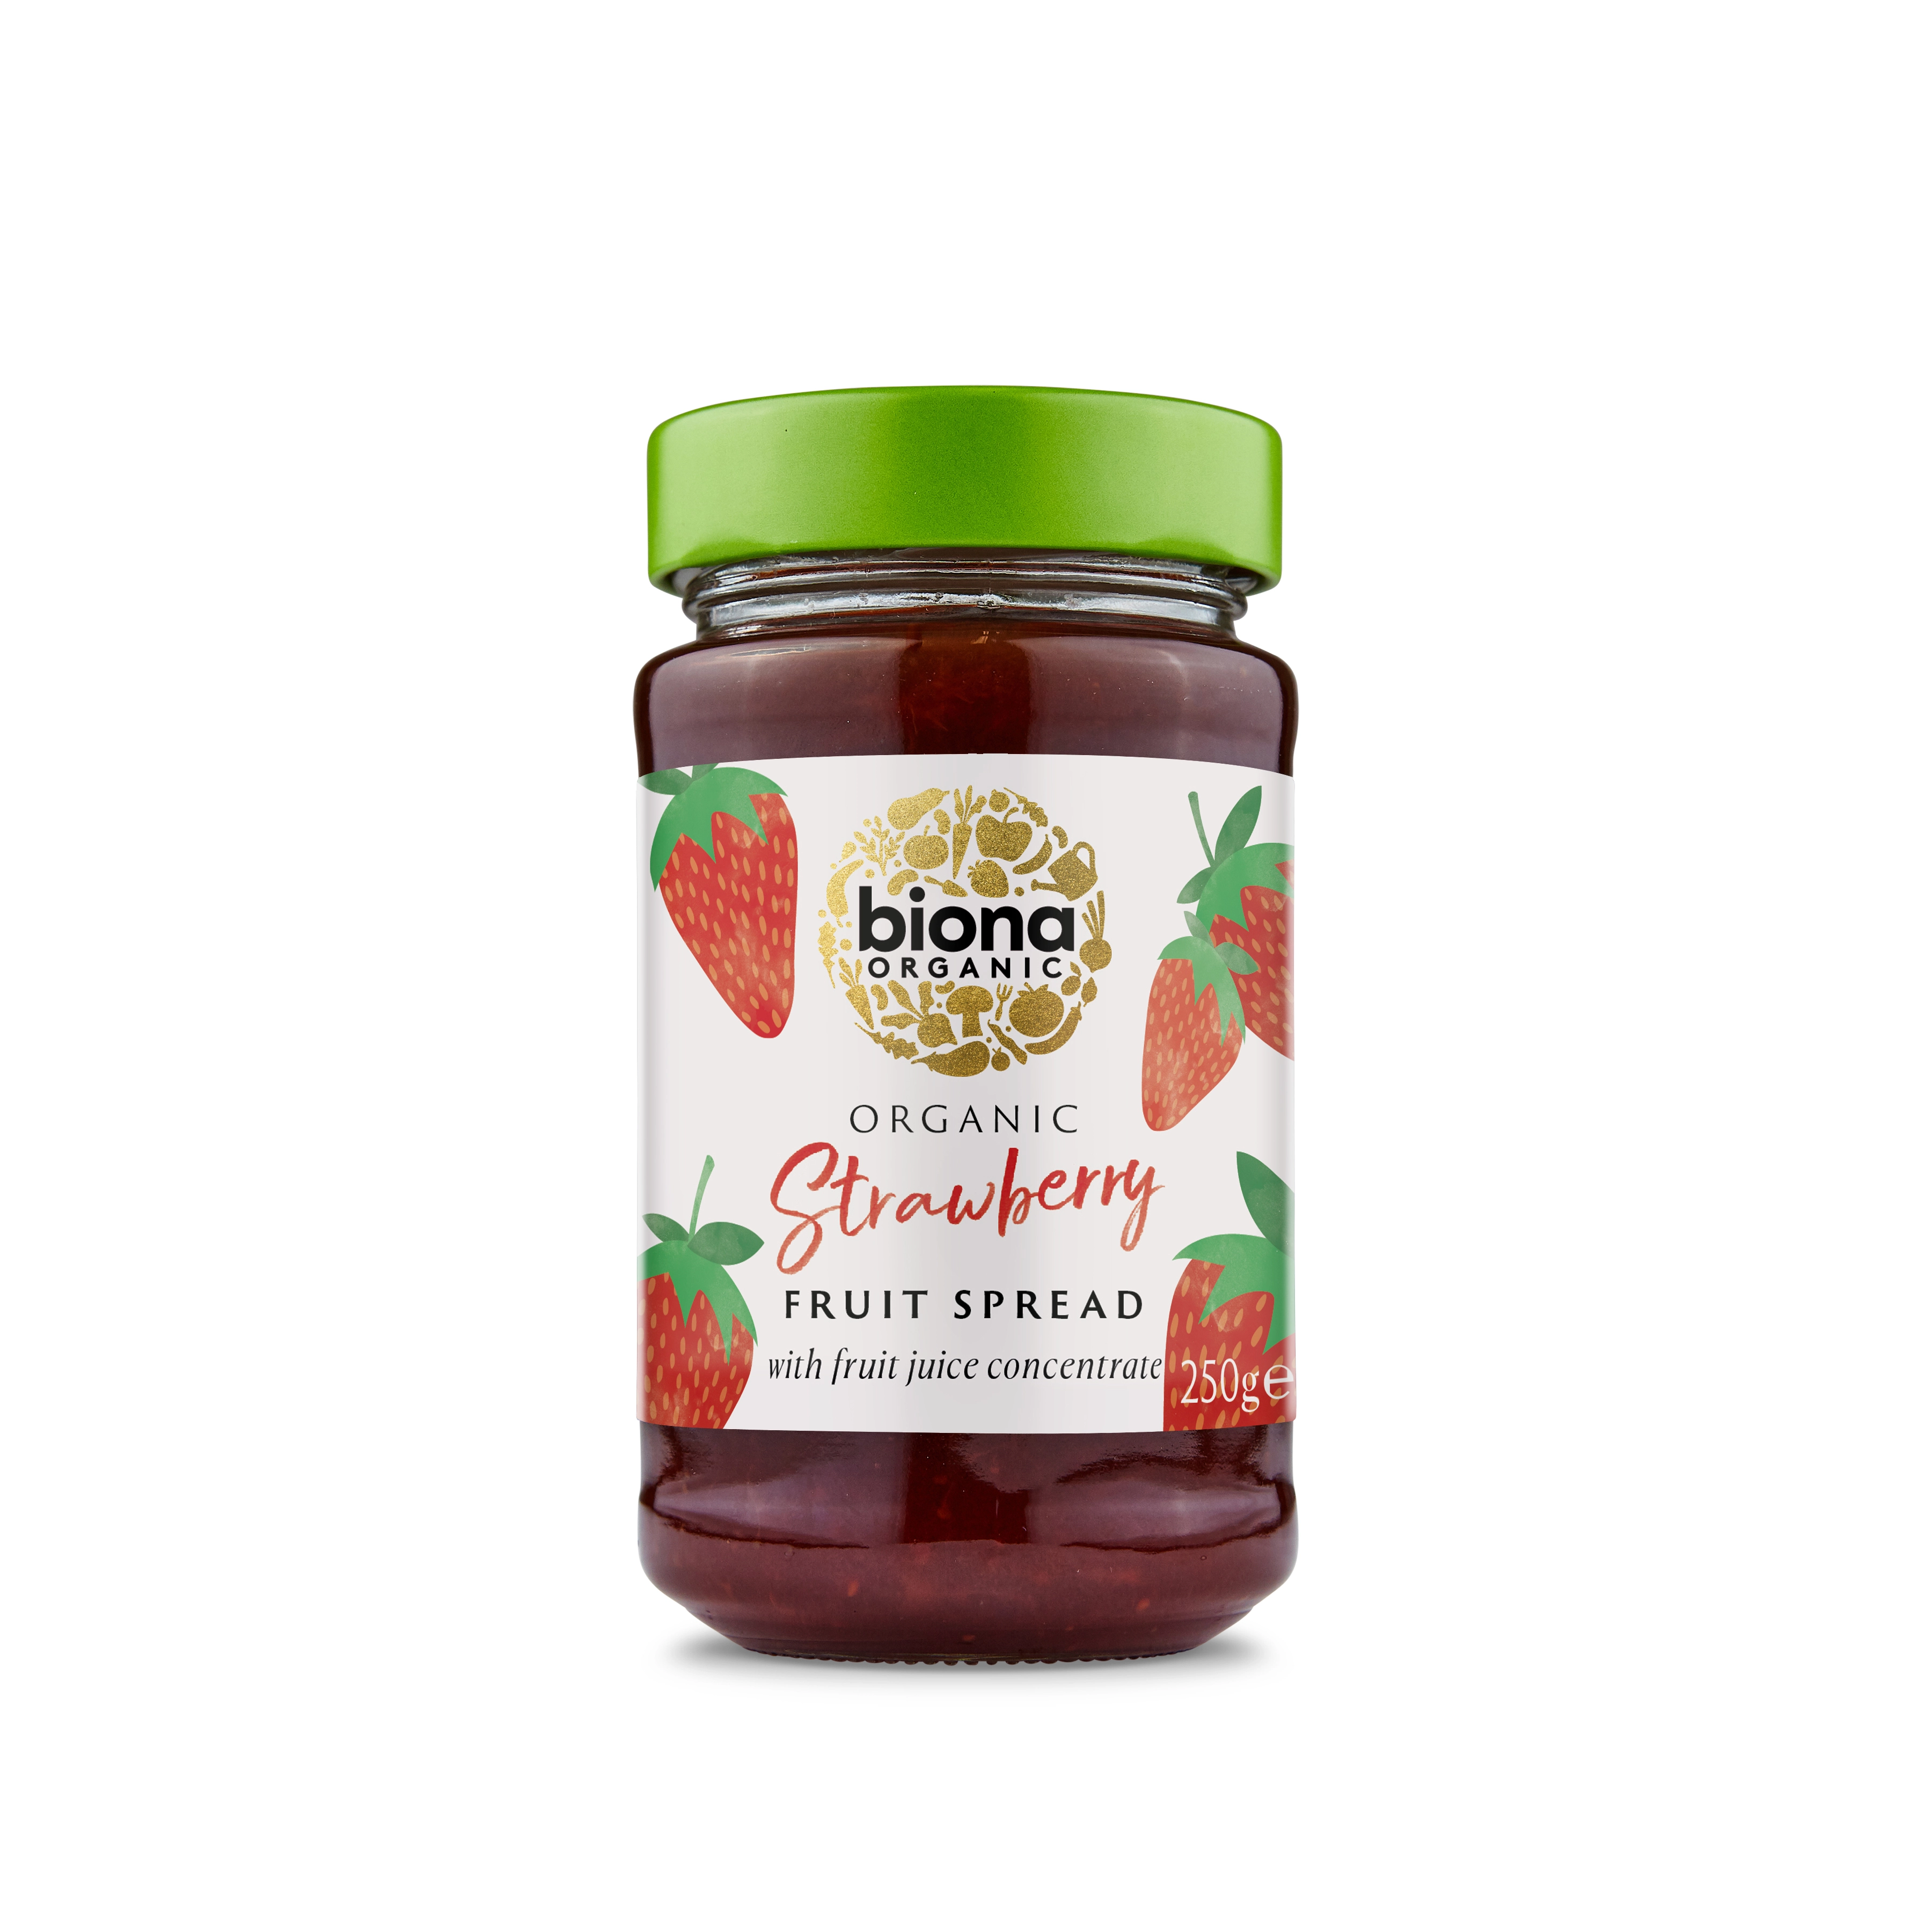 Biona Strawberry Spread (jam) Organic (sweetened with Fruit Juice) 250g